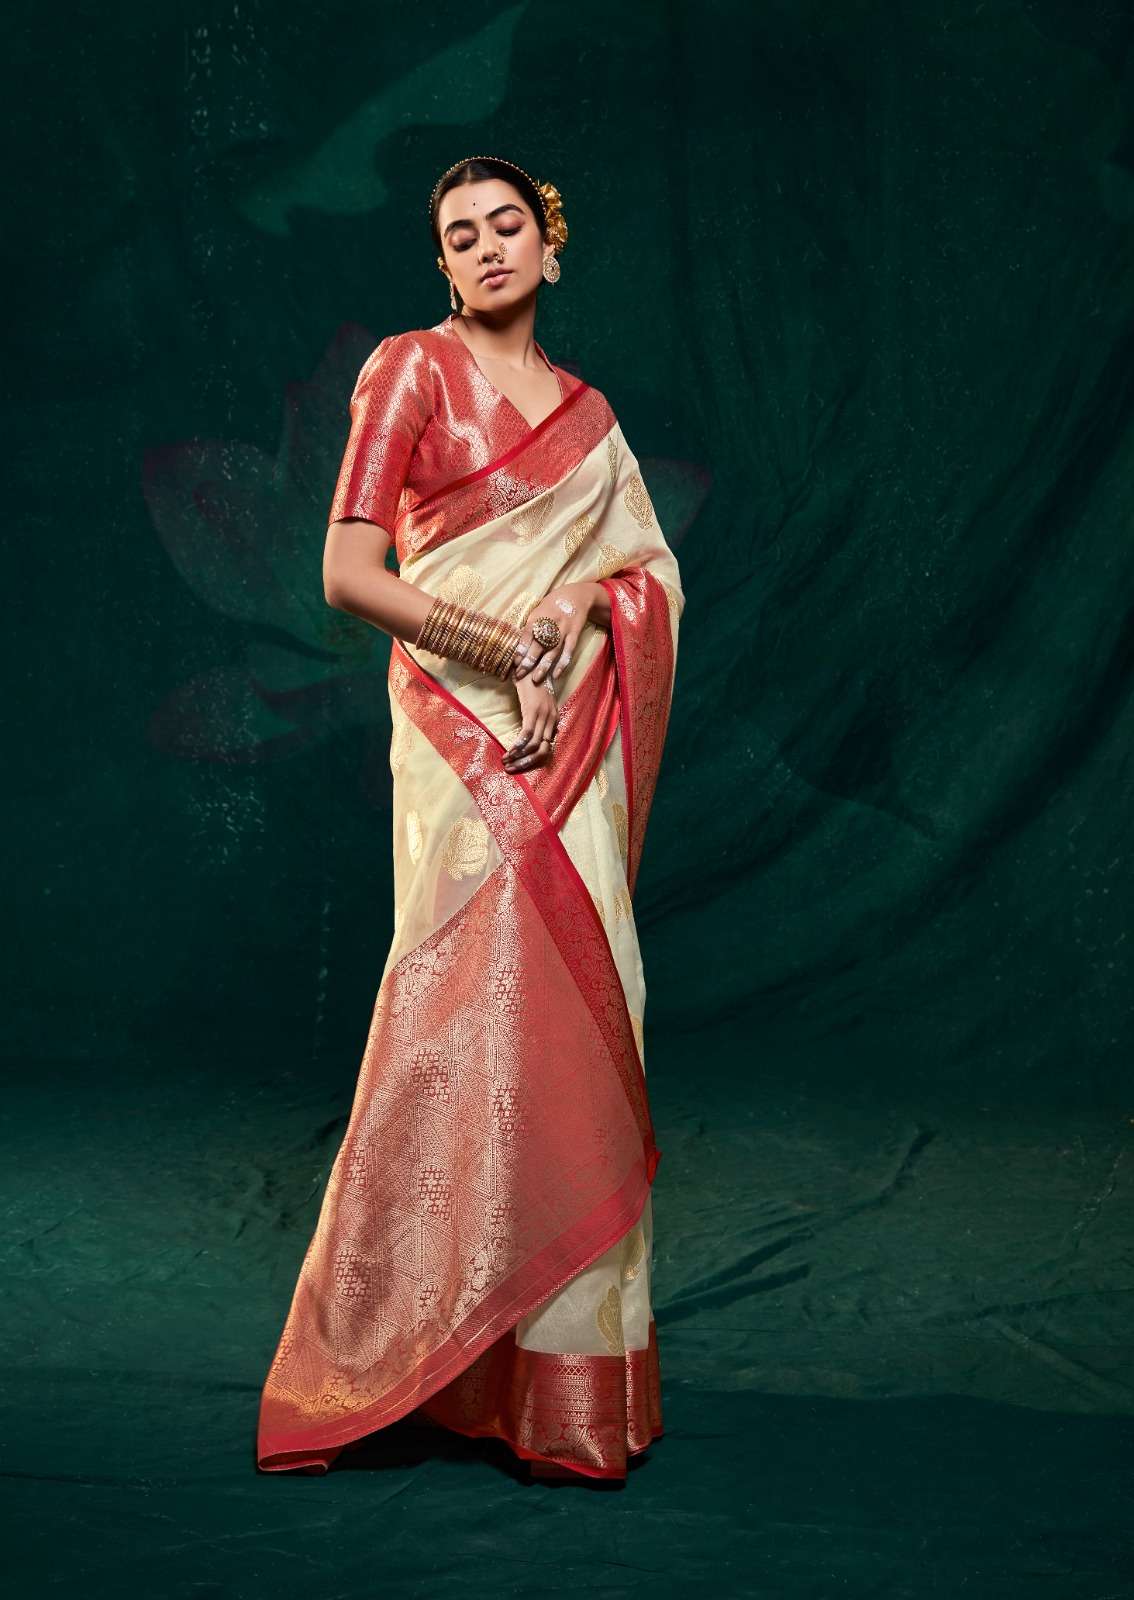 Rajpath Rani Silk Designer Organza Saree Wholesale catalog